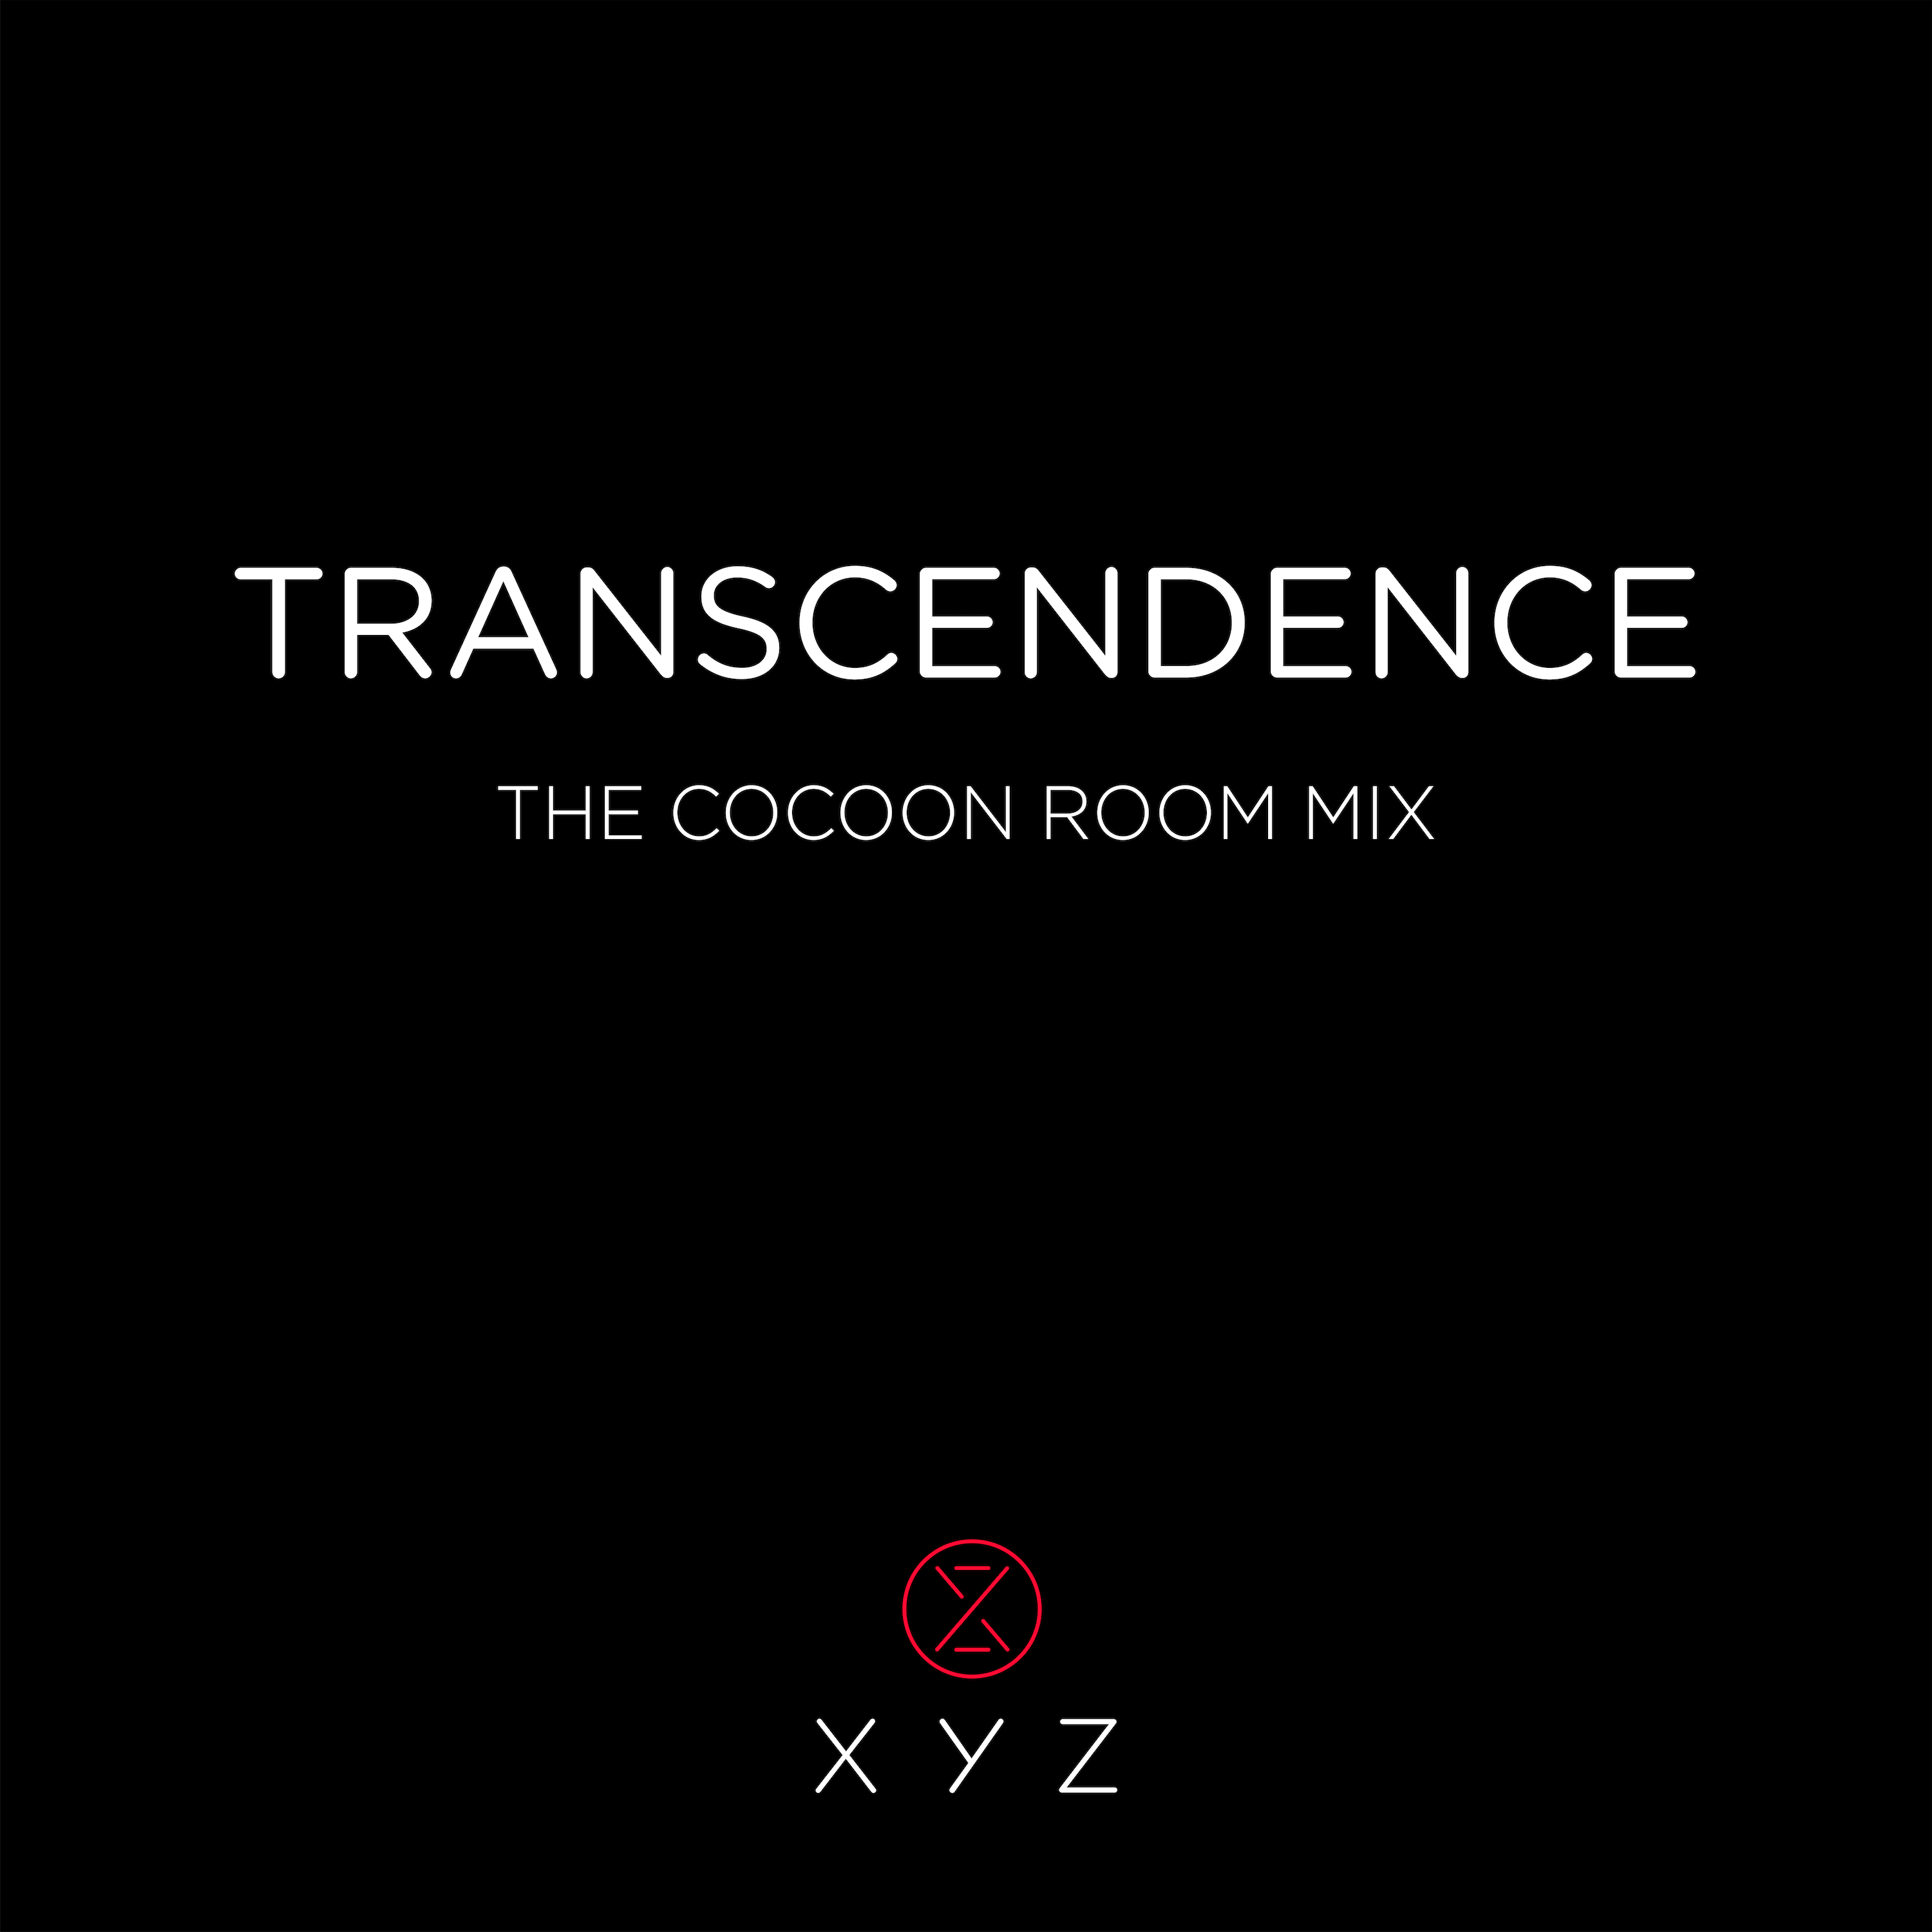 Artwork for Tszpun's Transcendence (The Cocoon room mix) single.